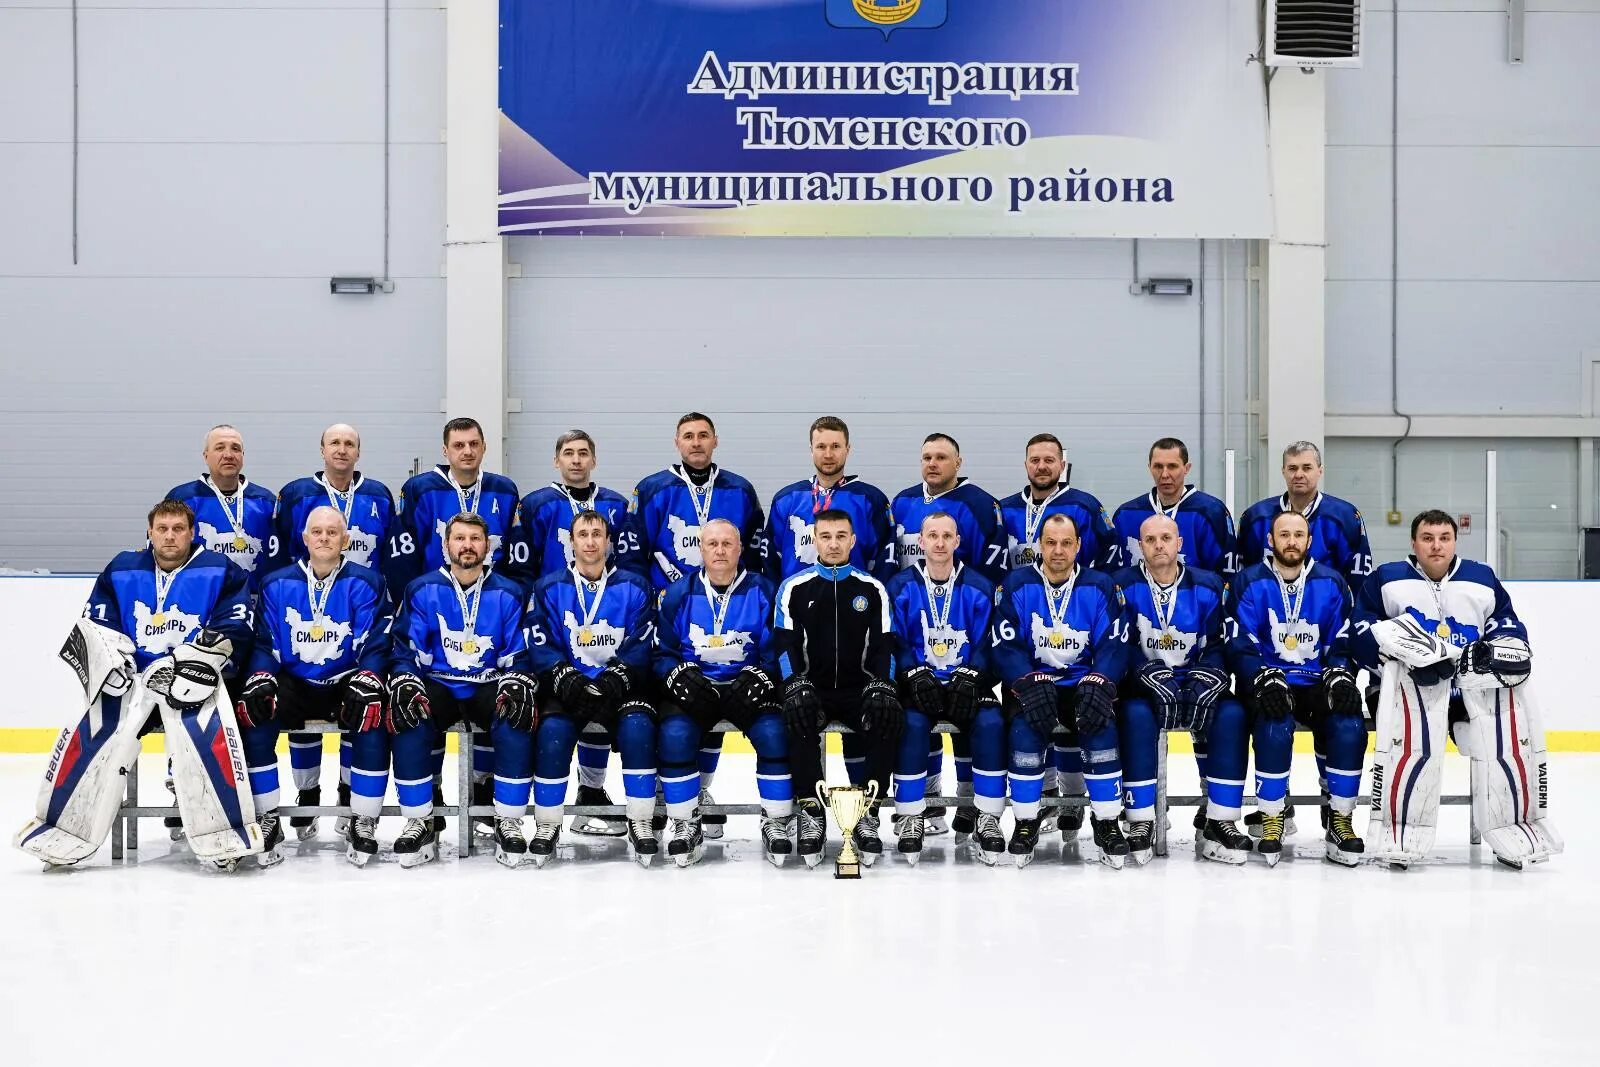 Хоккейная команда. Хоккей команда. Команда Сибирь хоккей. Команда Тюменский район хоккей.